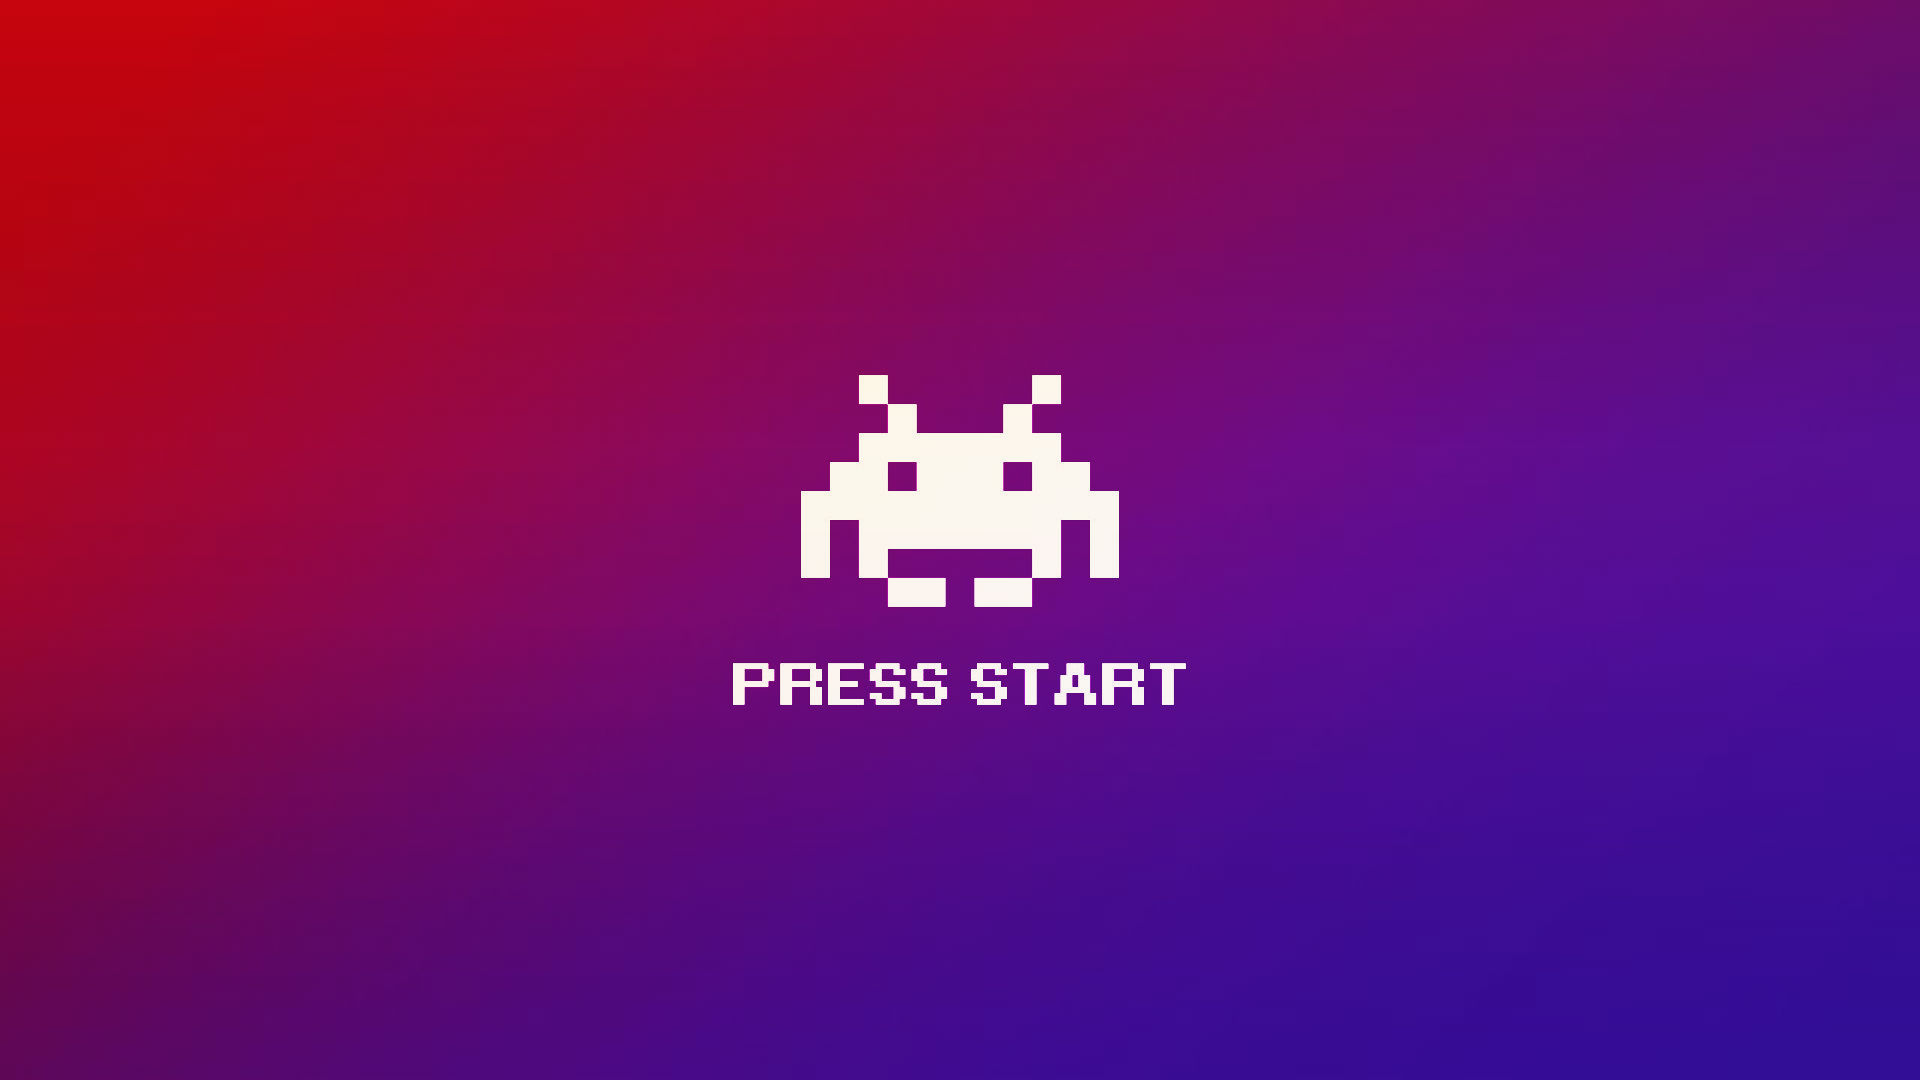 Start game. Press start. Press start обои. Надпись Press start. Логотипы компьютерных игр.